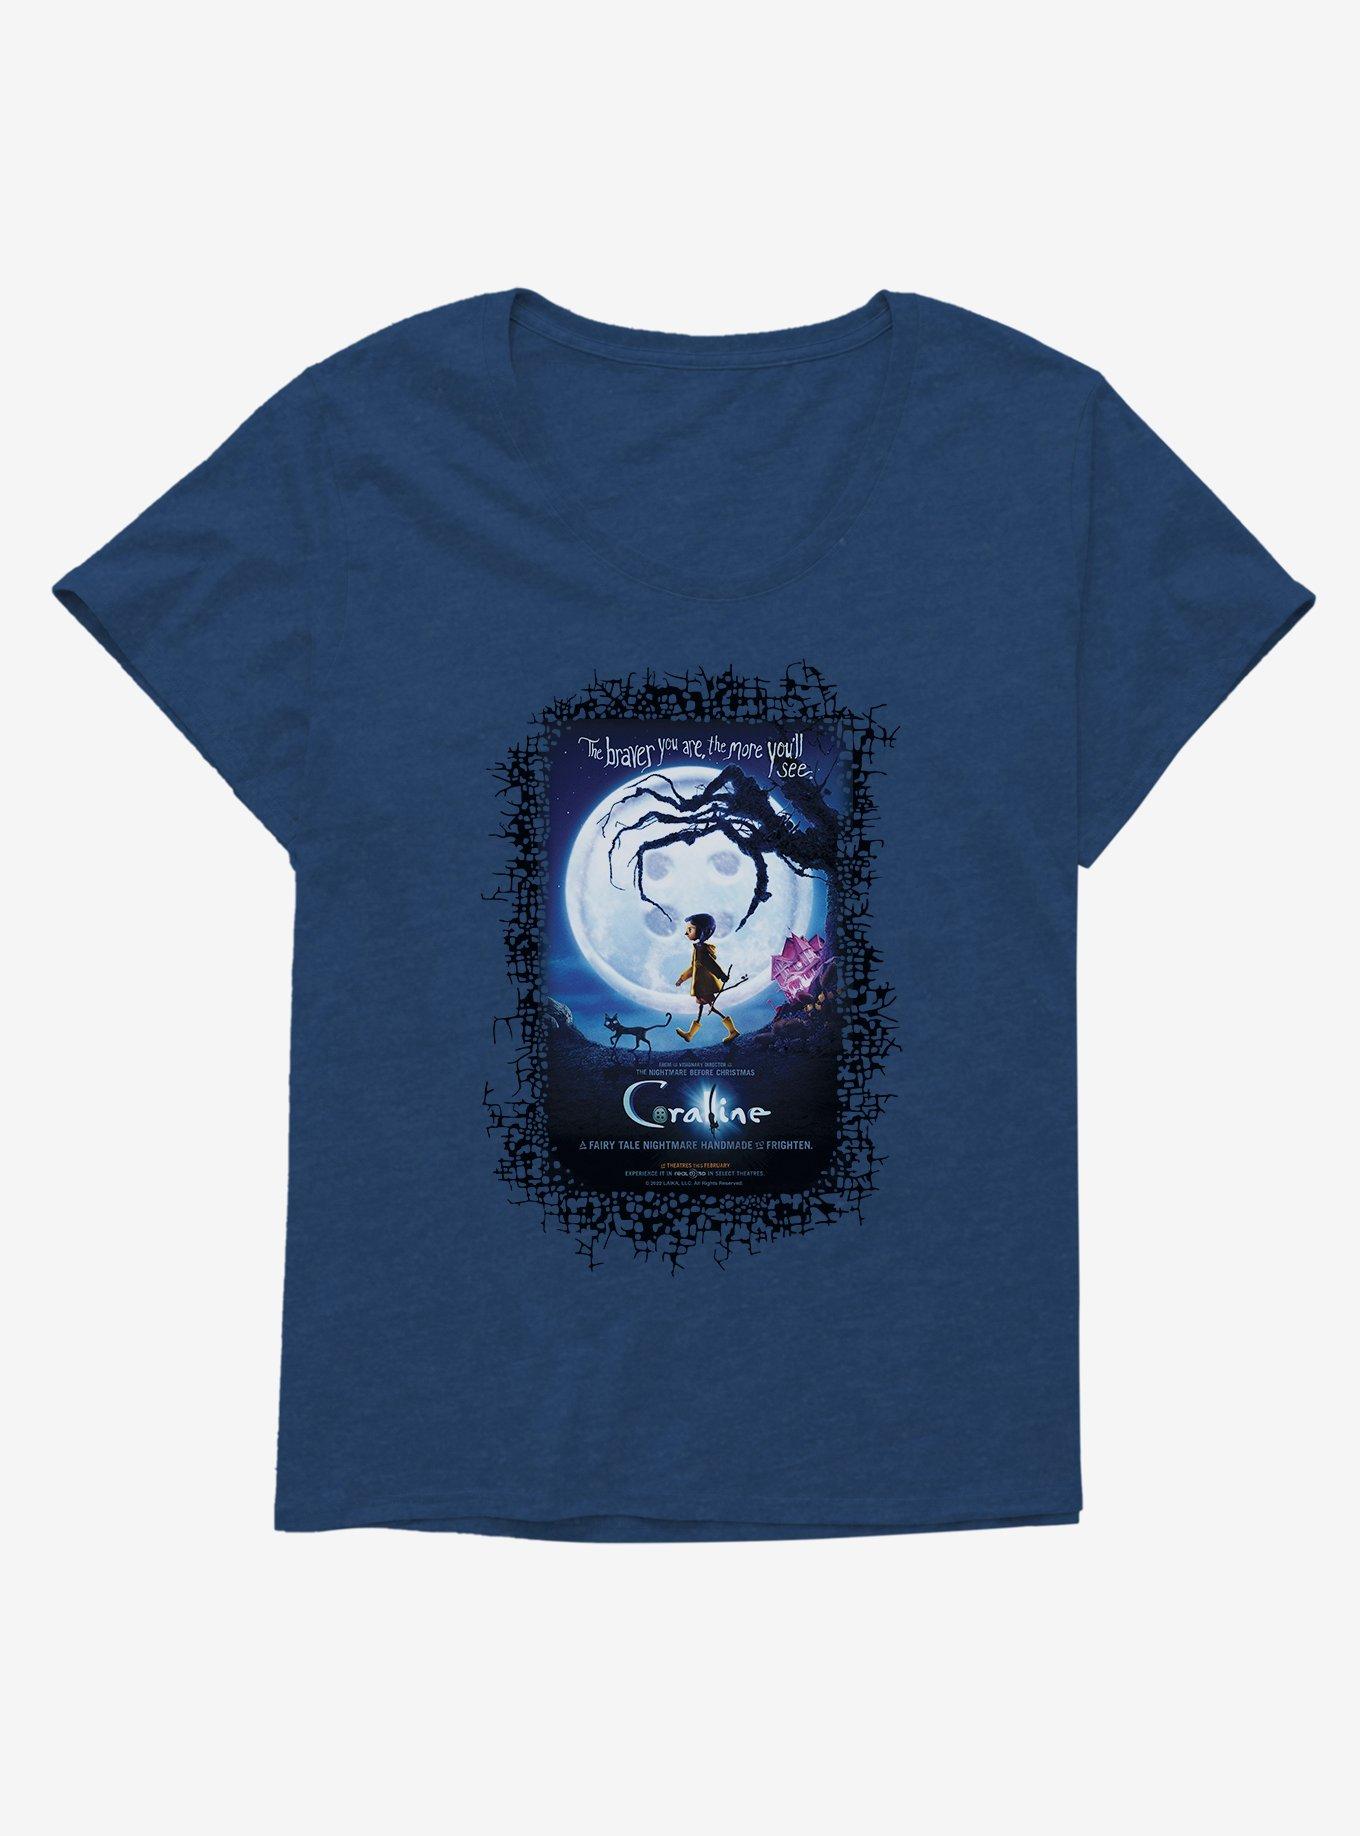 Coraline Moon Silhouette Poster Girls T-Shirt Plus